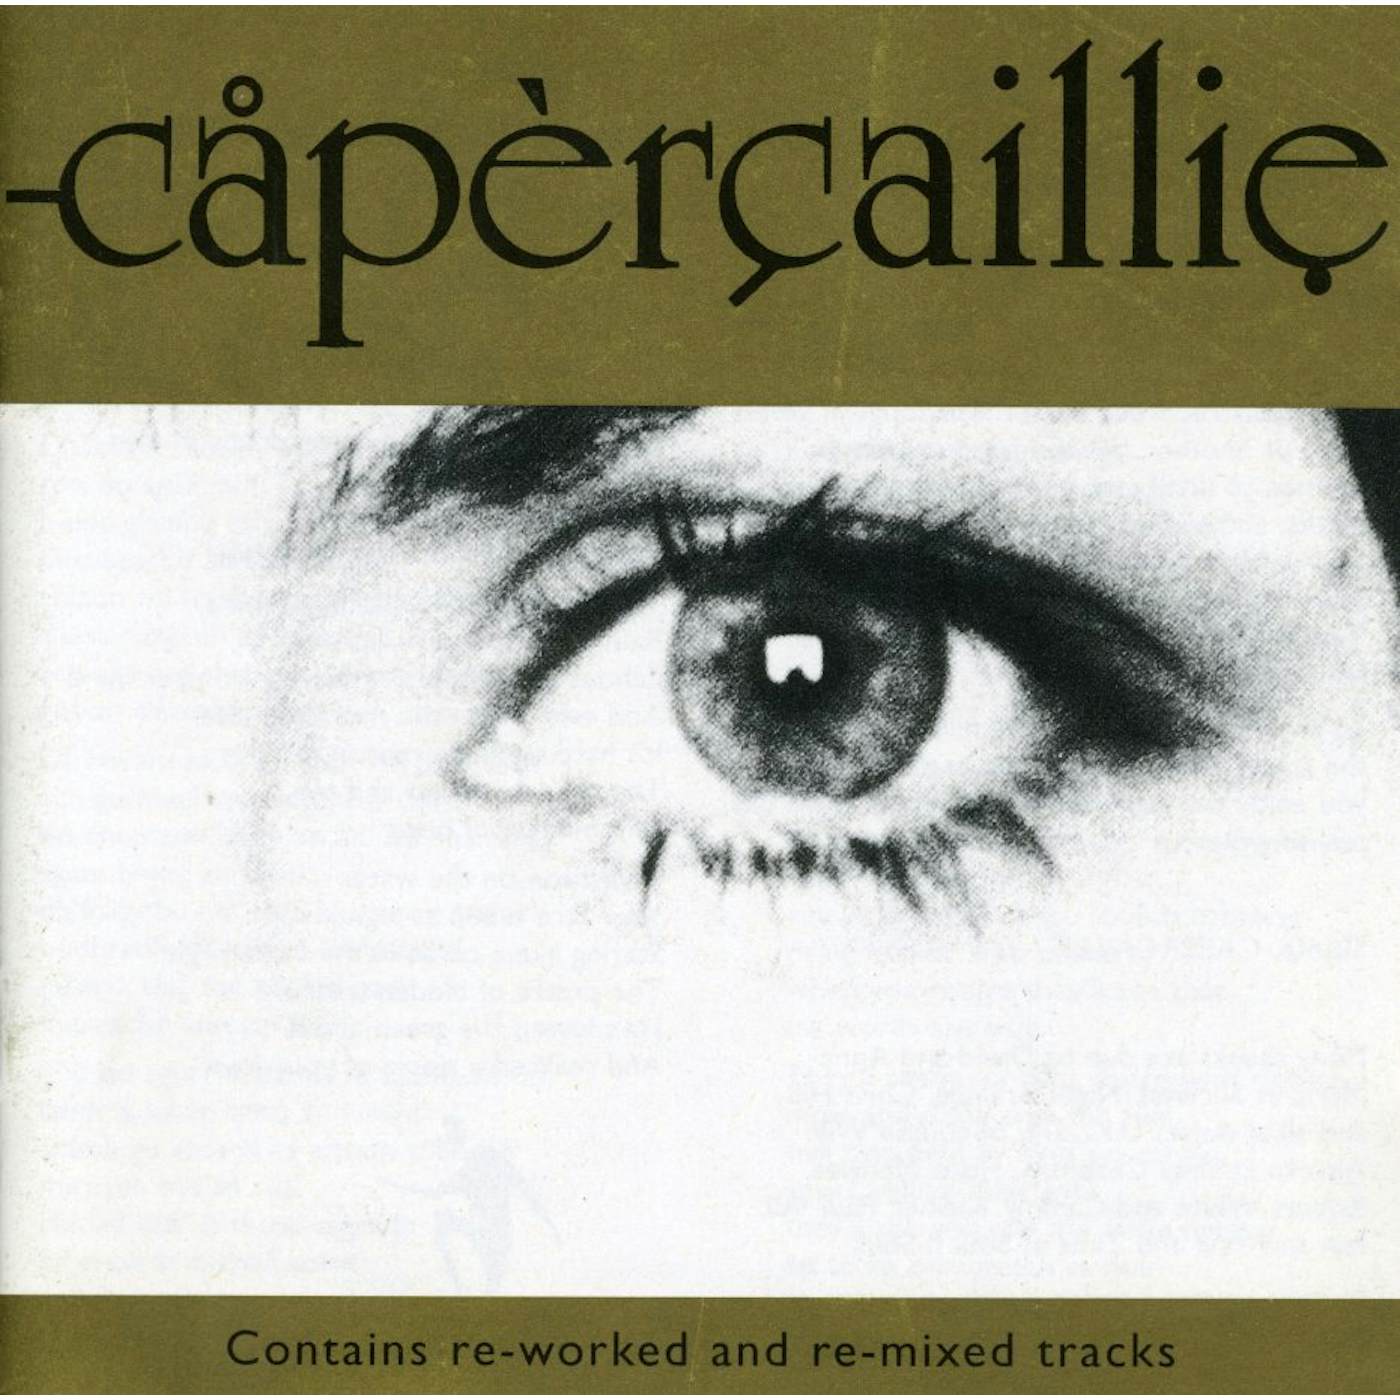 CAPERCAILLIE CD